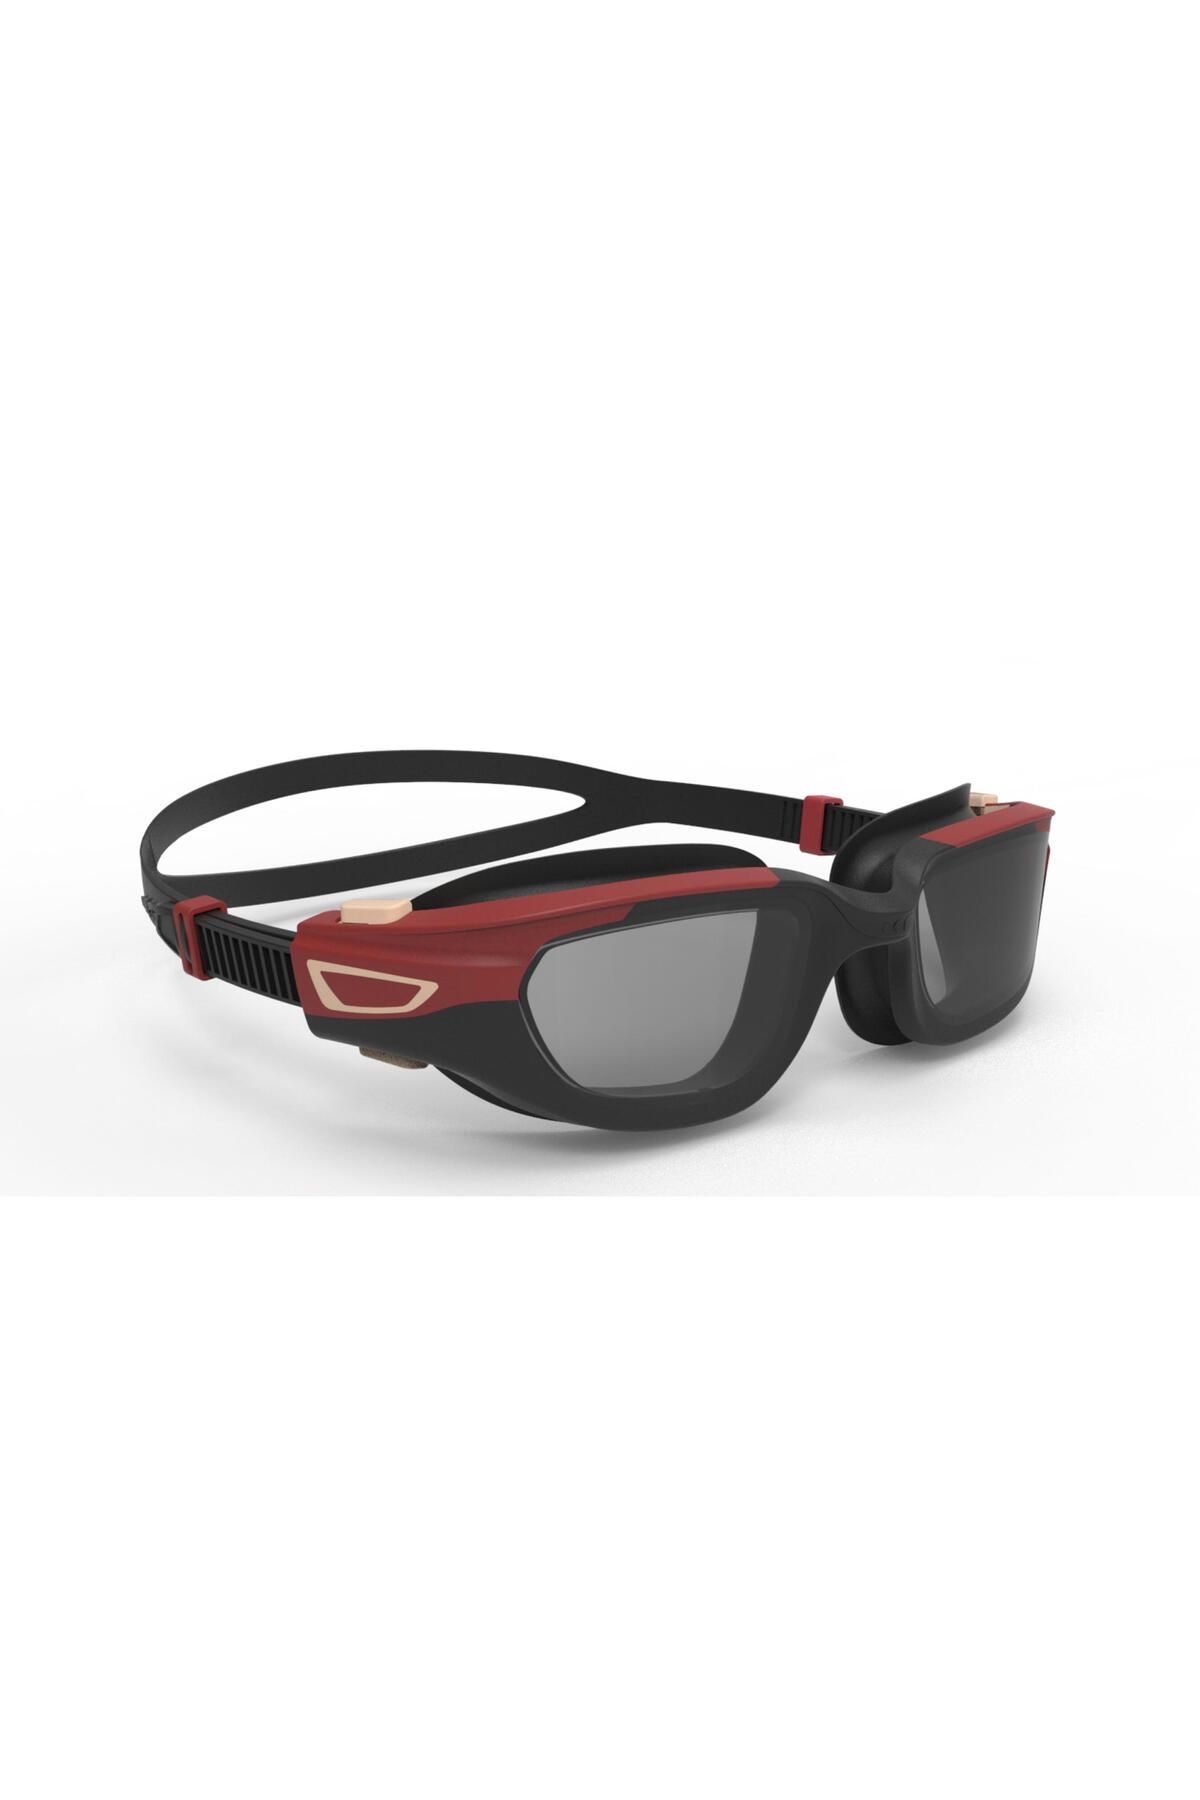 Decathlon Yüzücü Gözlüğü - Kırmızı / Siyah / Bej - Füme Camlar - L Boy - Spırıt